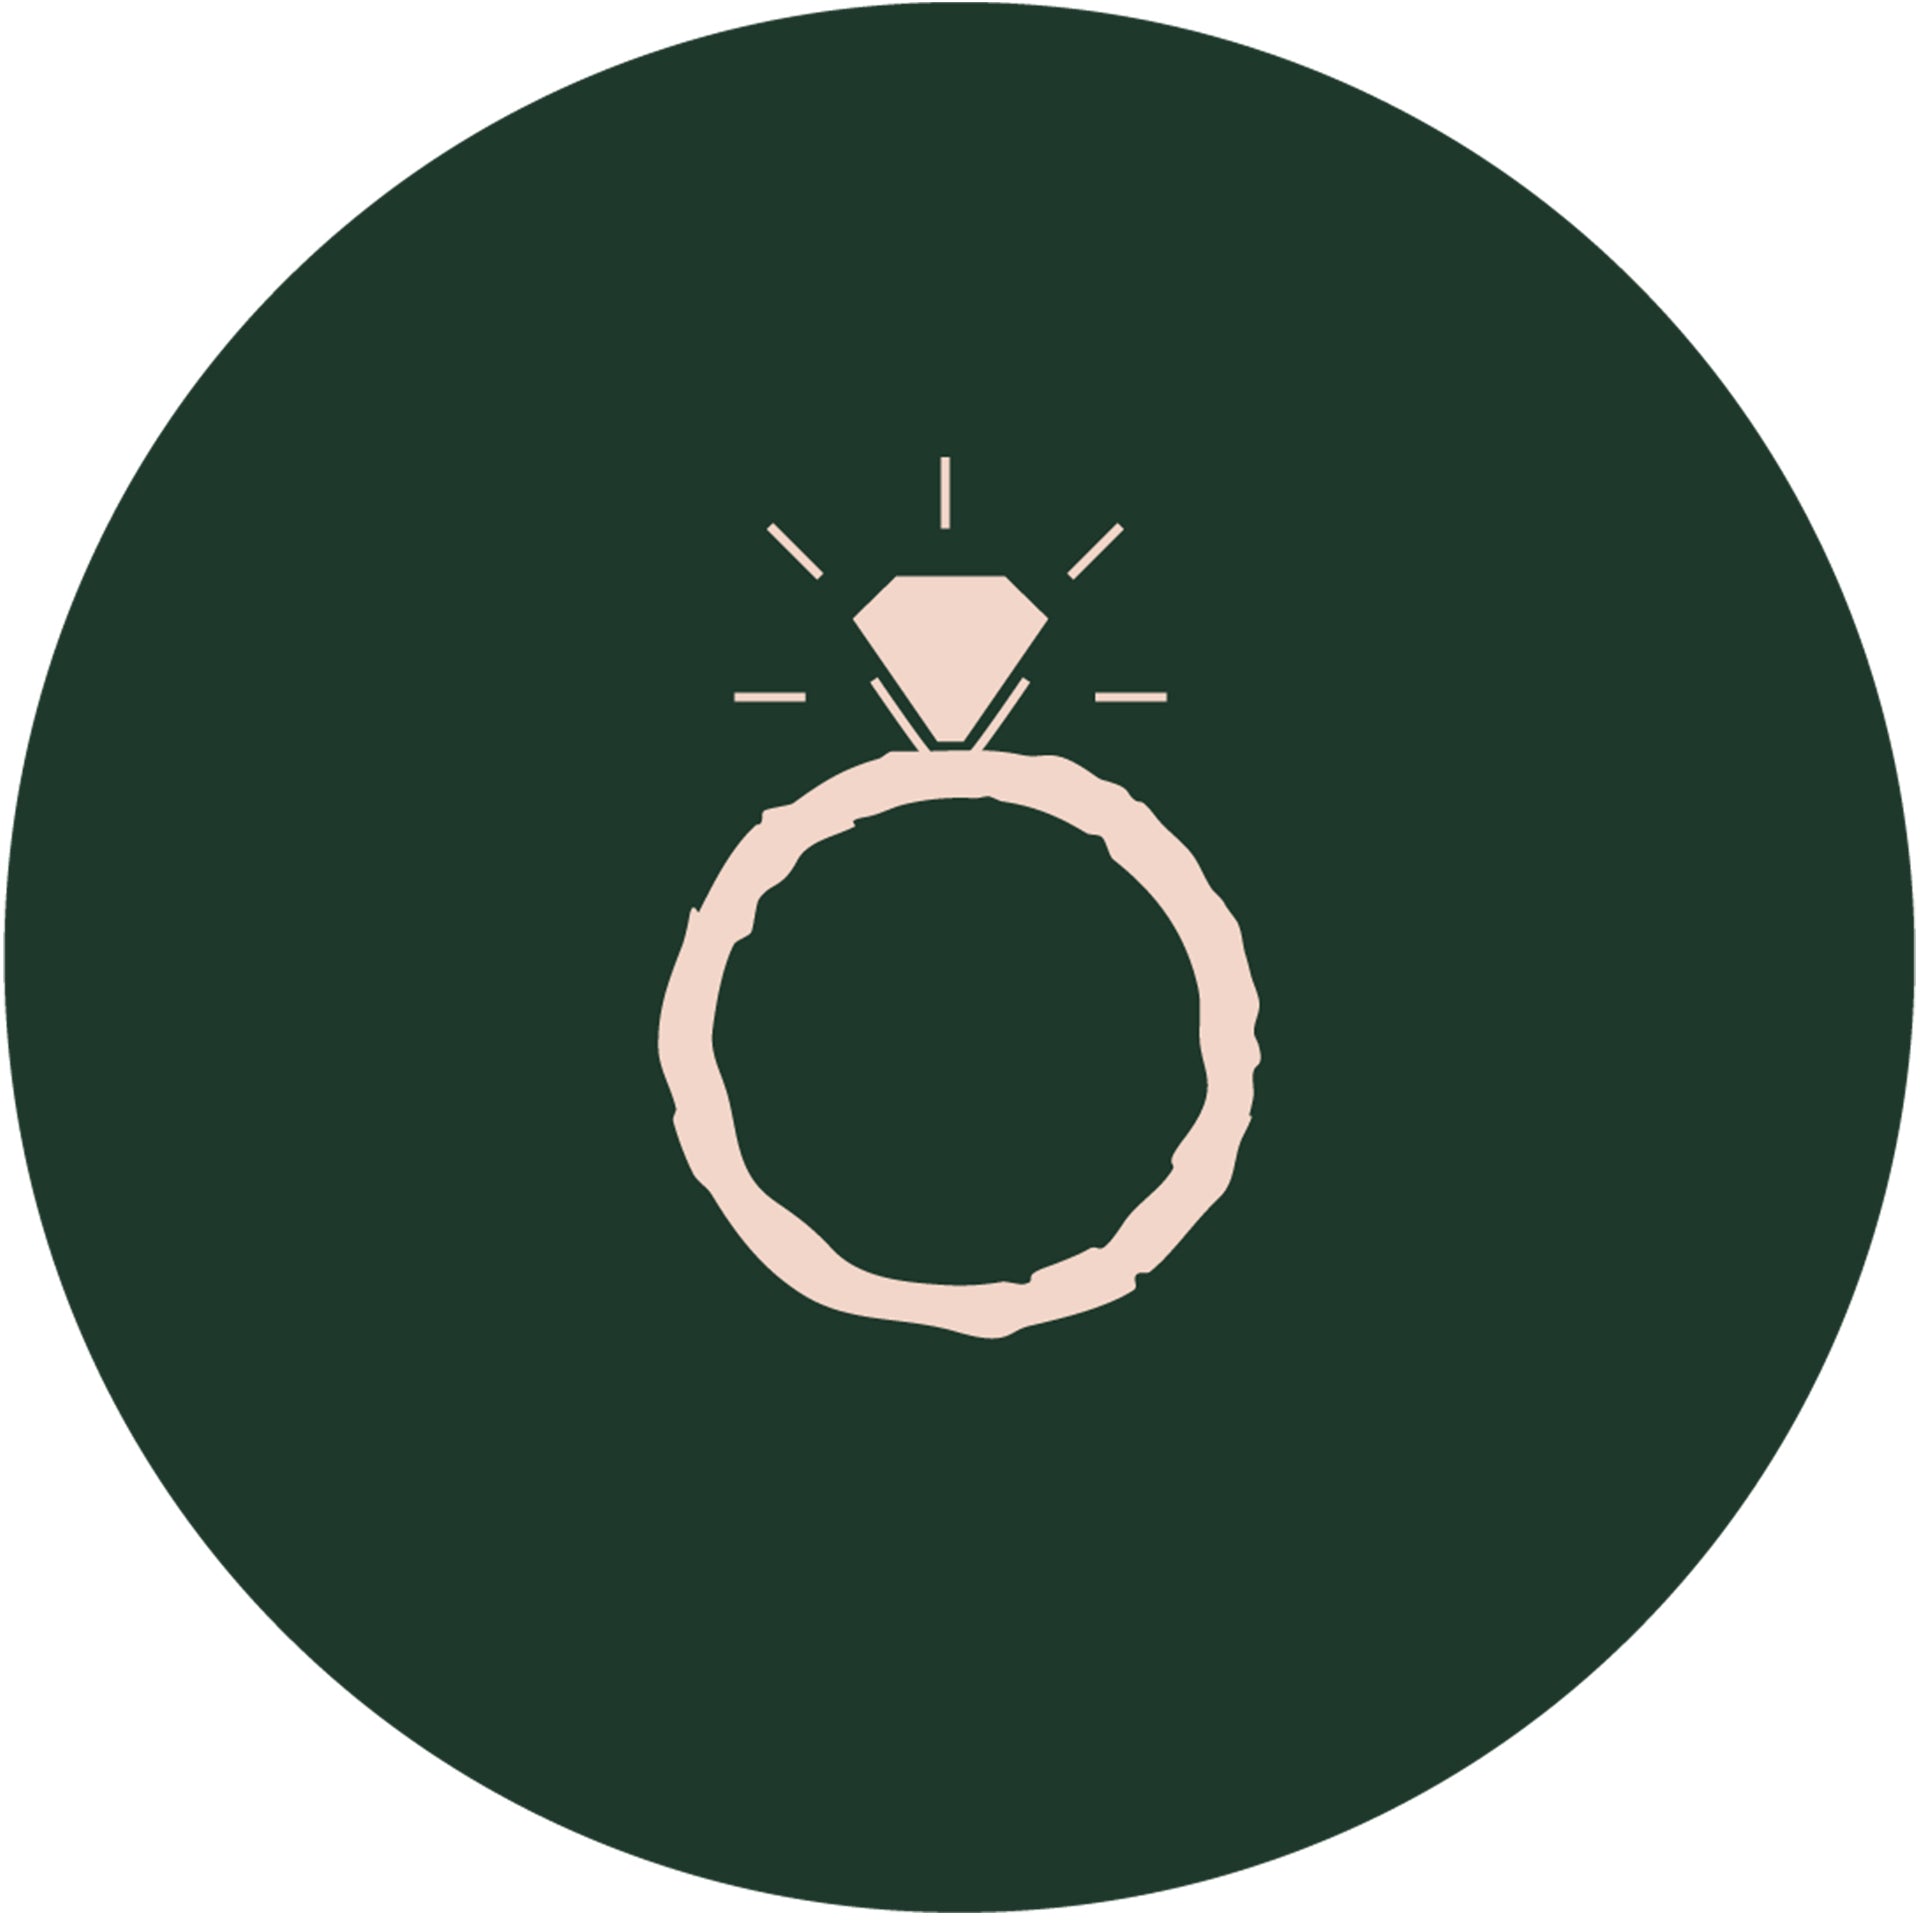 engagement ring illustration on green circle